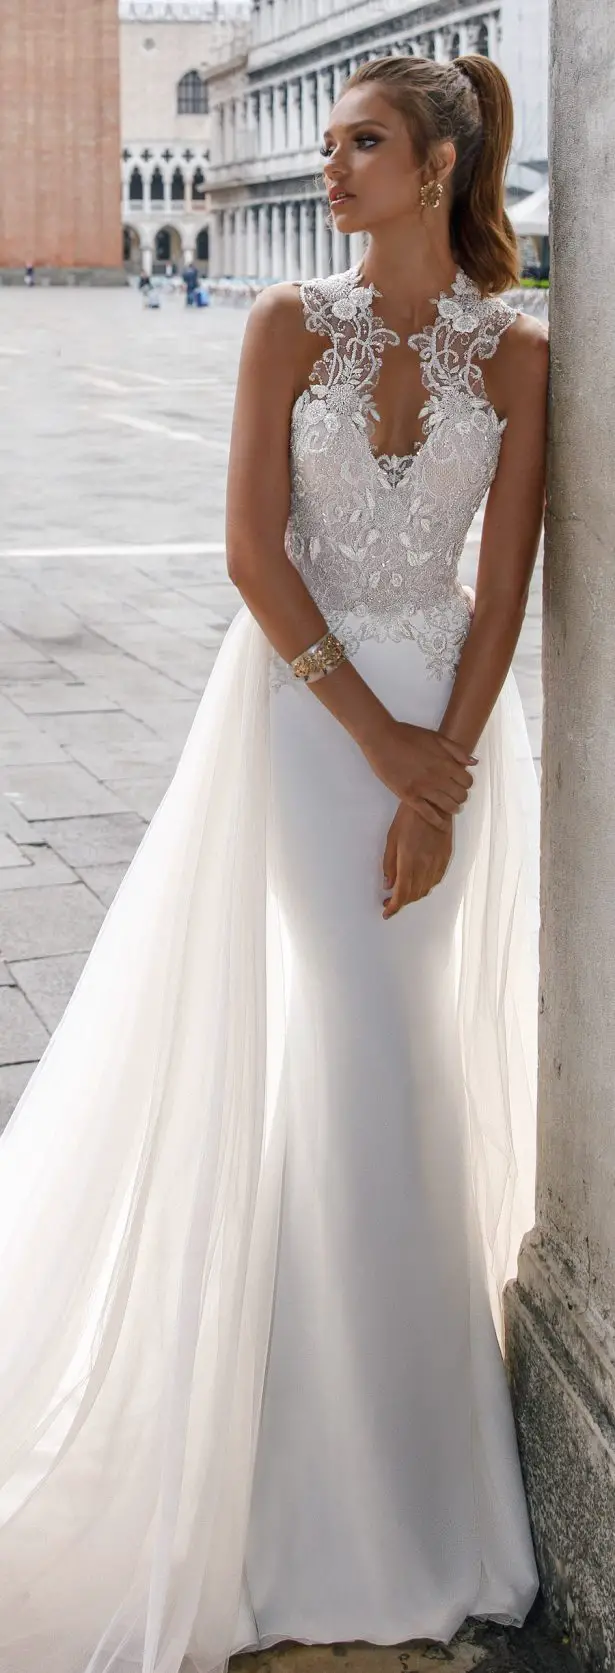 Julie Vino Spring 2018 Wedding Dresses -Venezia Bridal Collection